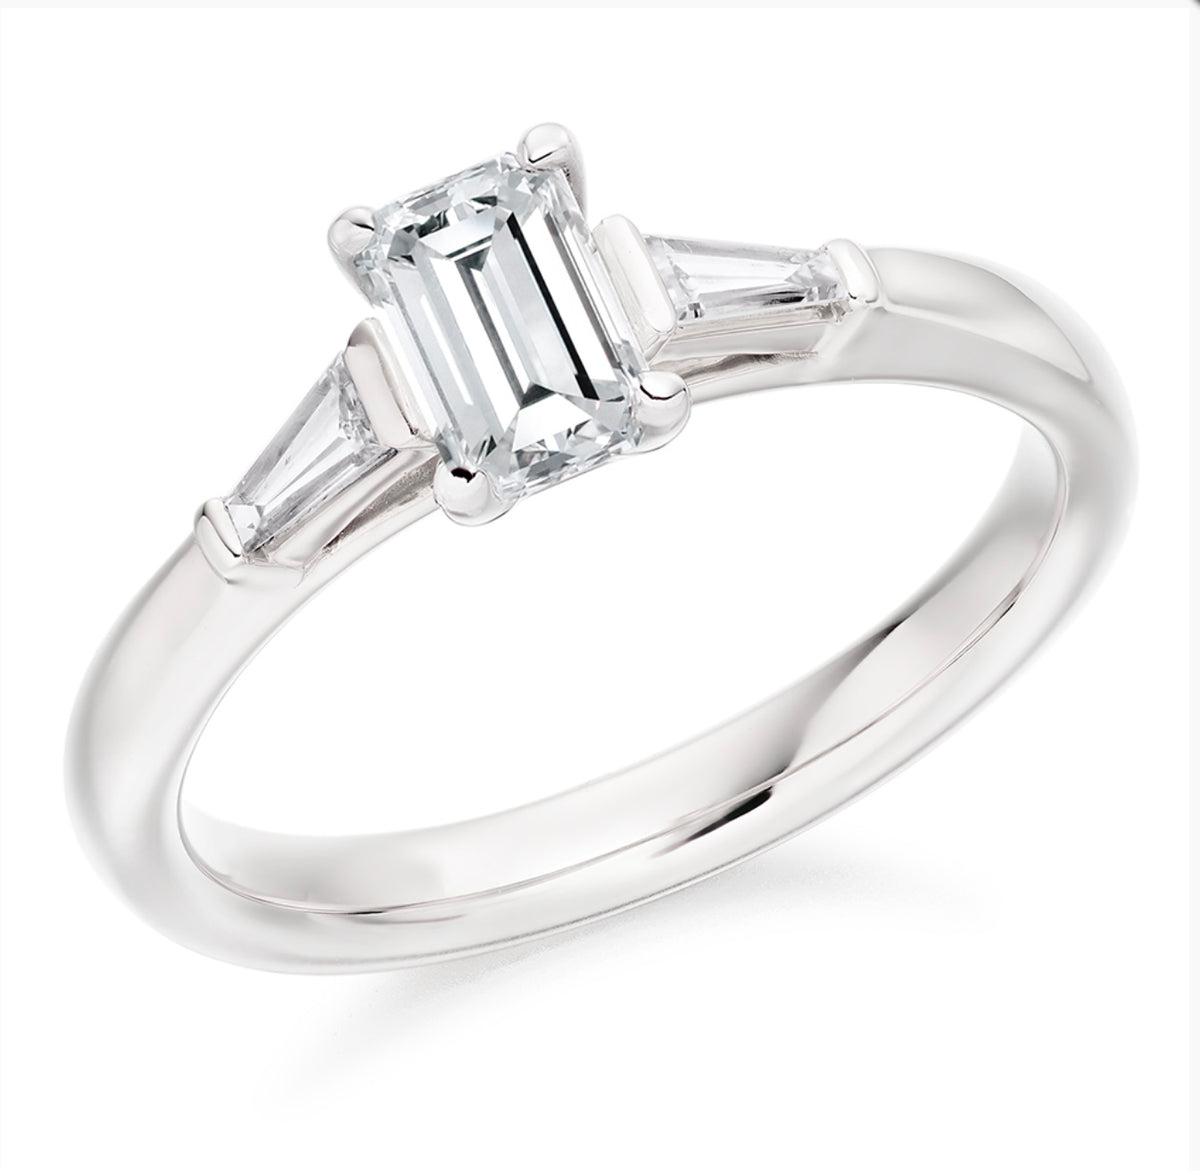 Platinum emerald cut diamond trilogy ring